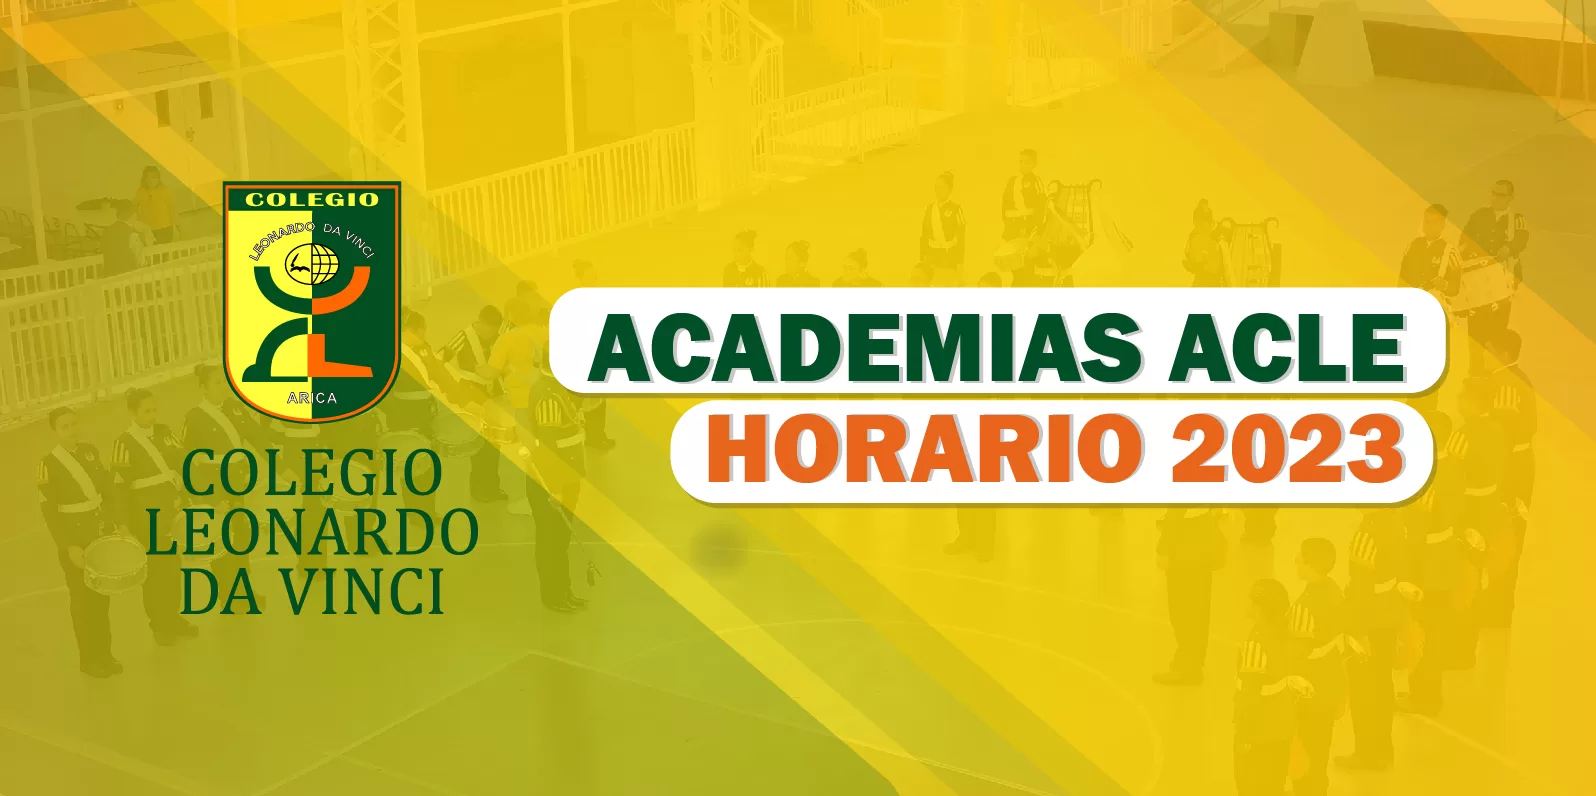 Horario academias ACLE 2023